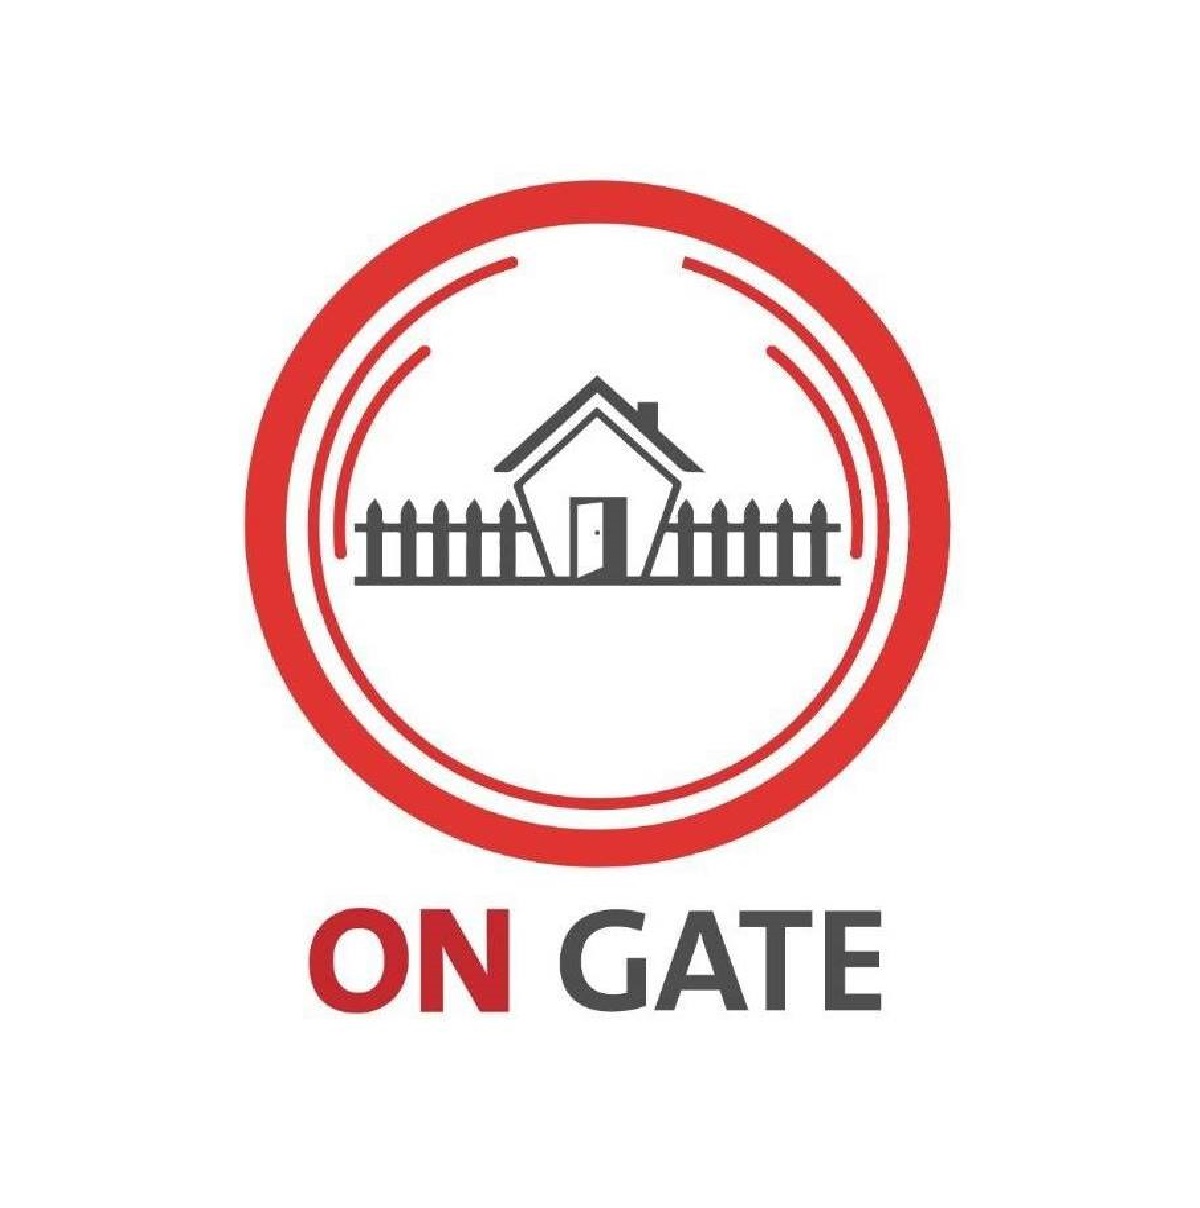 On Gate